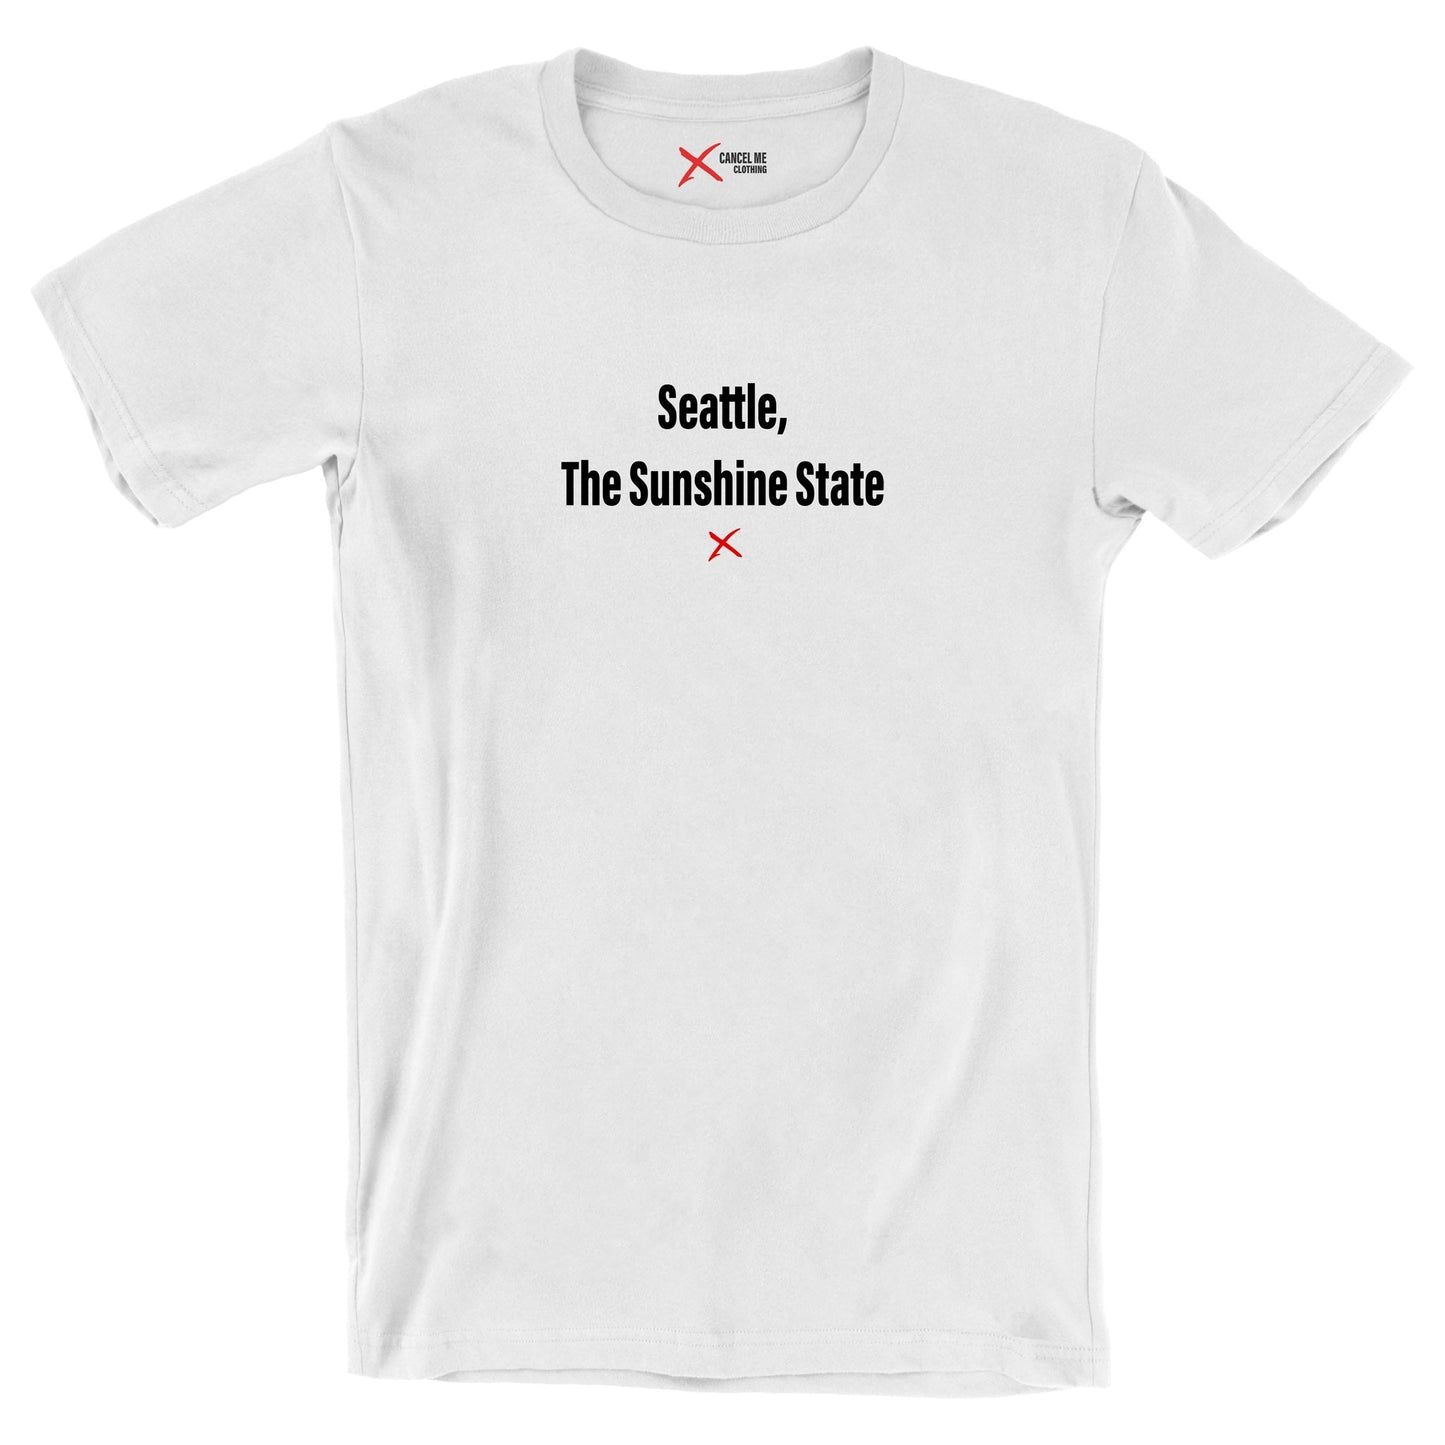 Seattle, The Sunshine State - Shirt